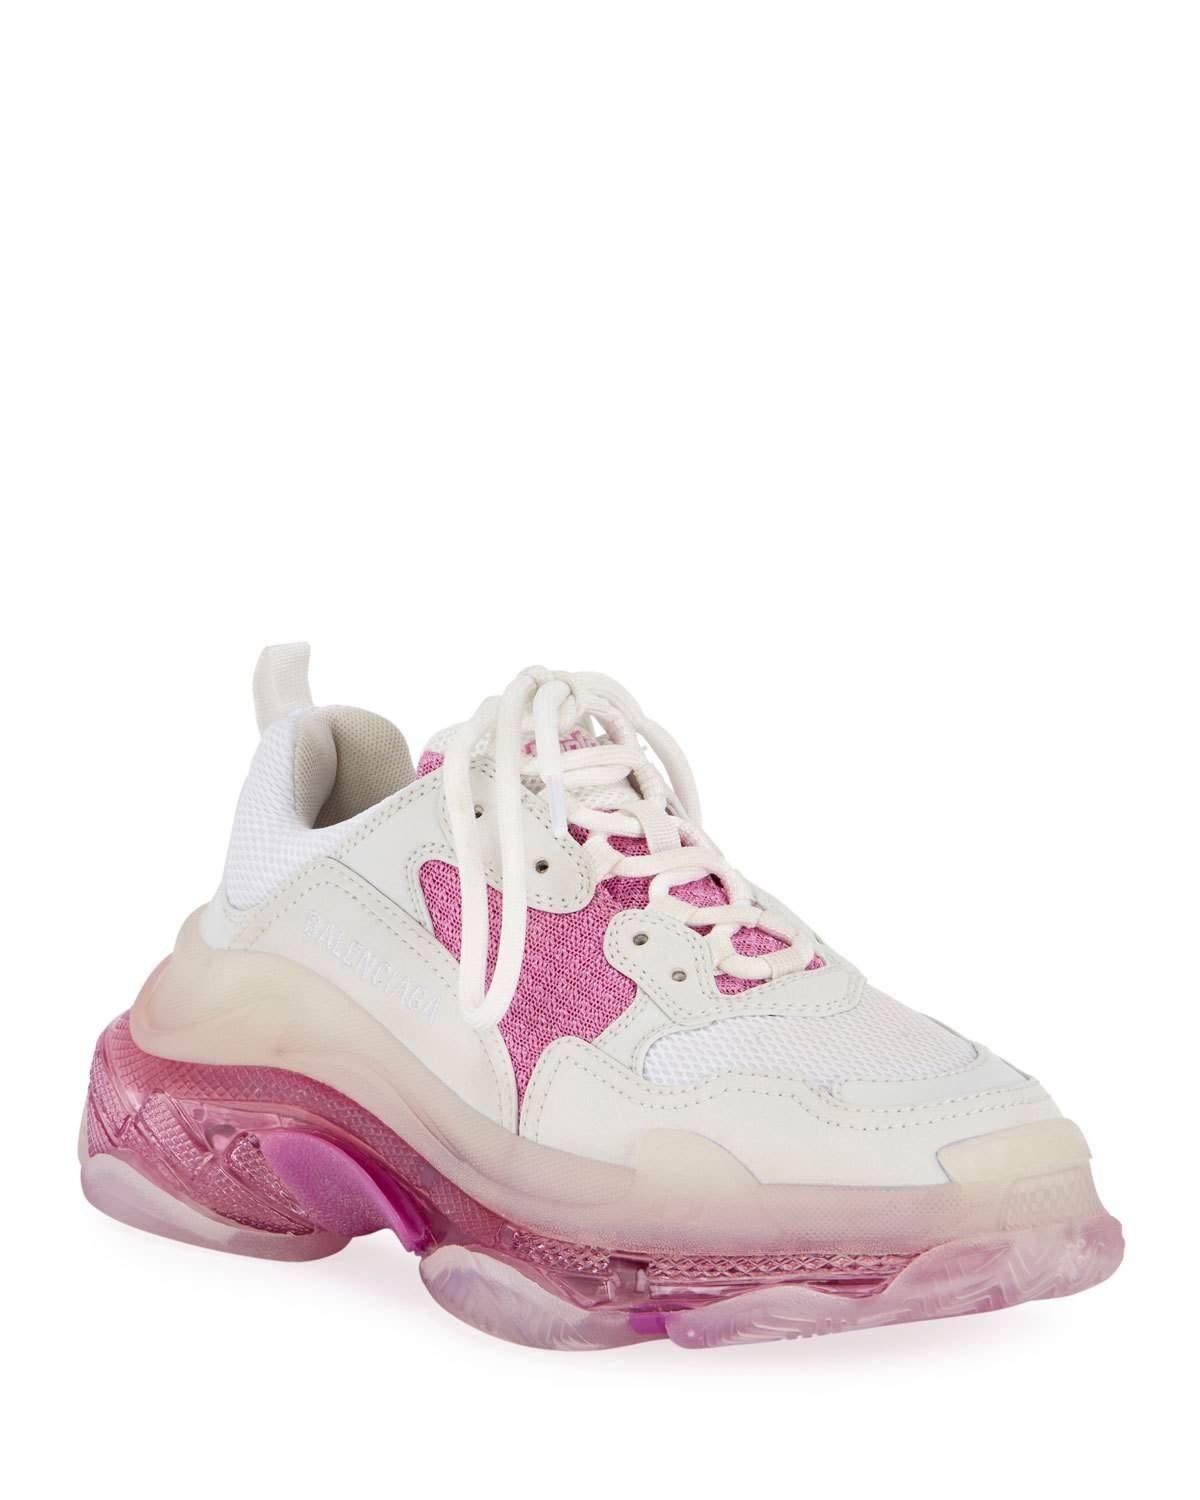 white and pink balenciaga shoes